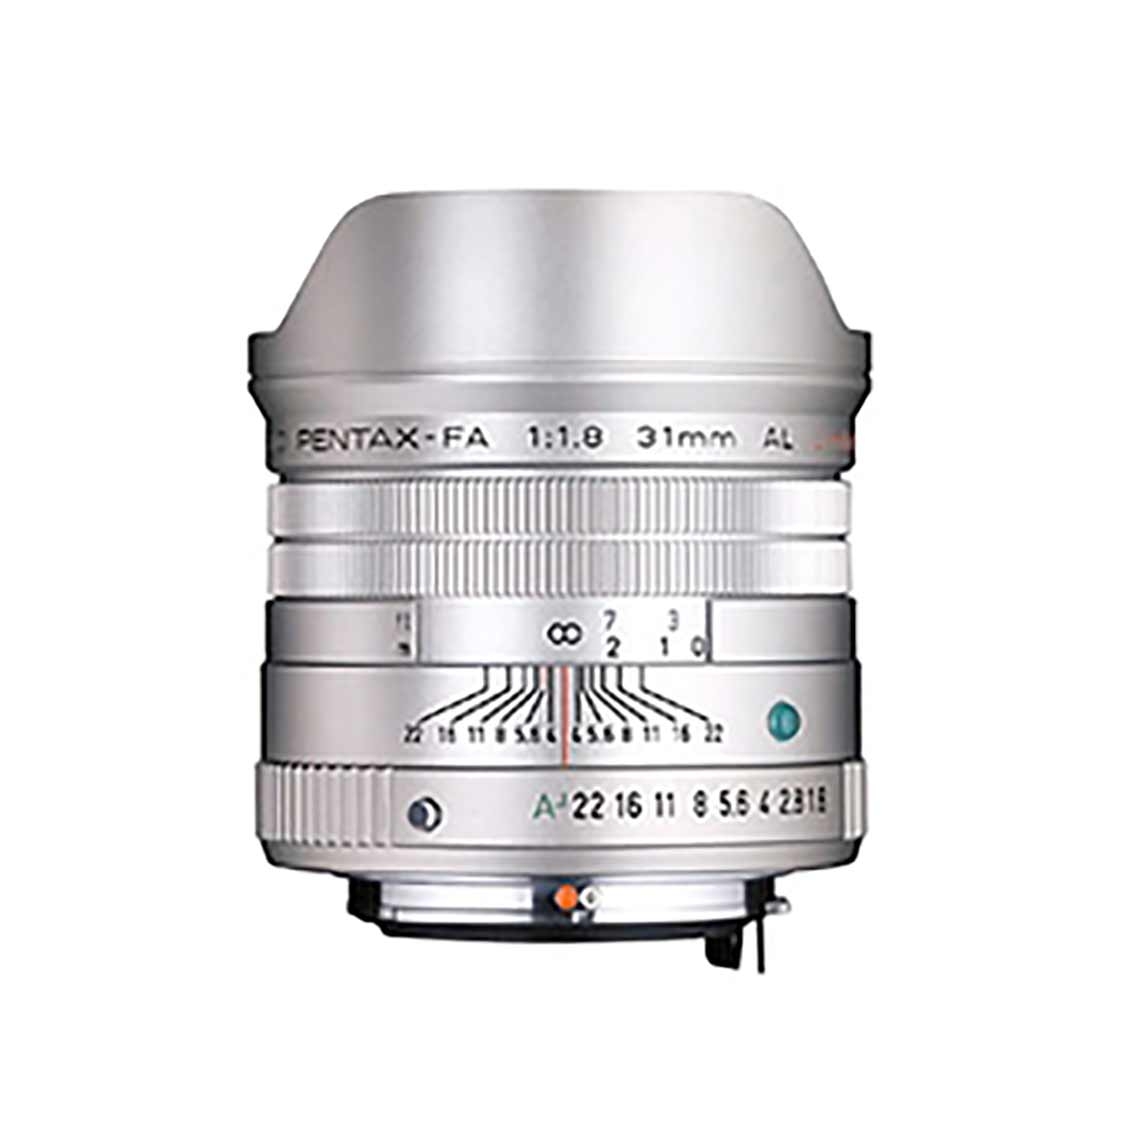 Pentax FA 31mm F1.8 Lens (silver)